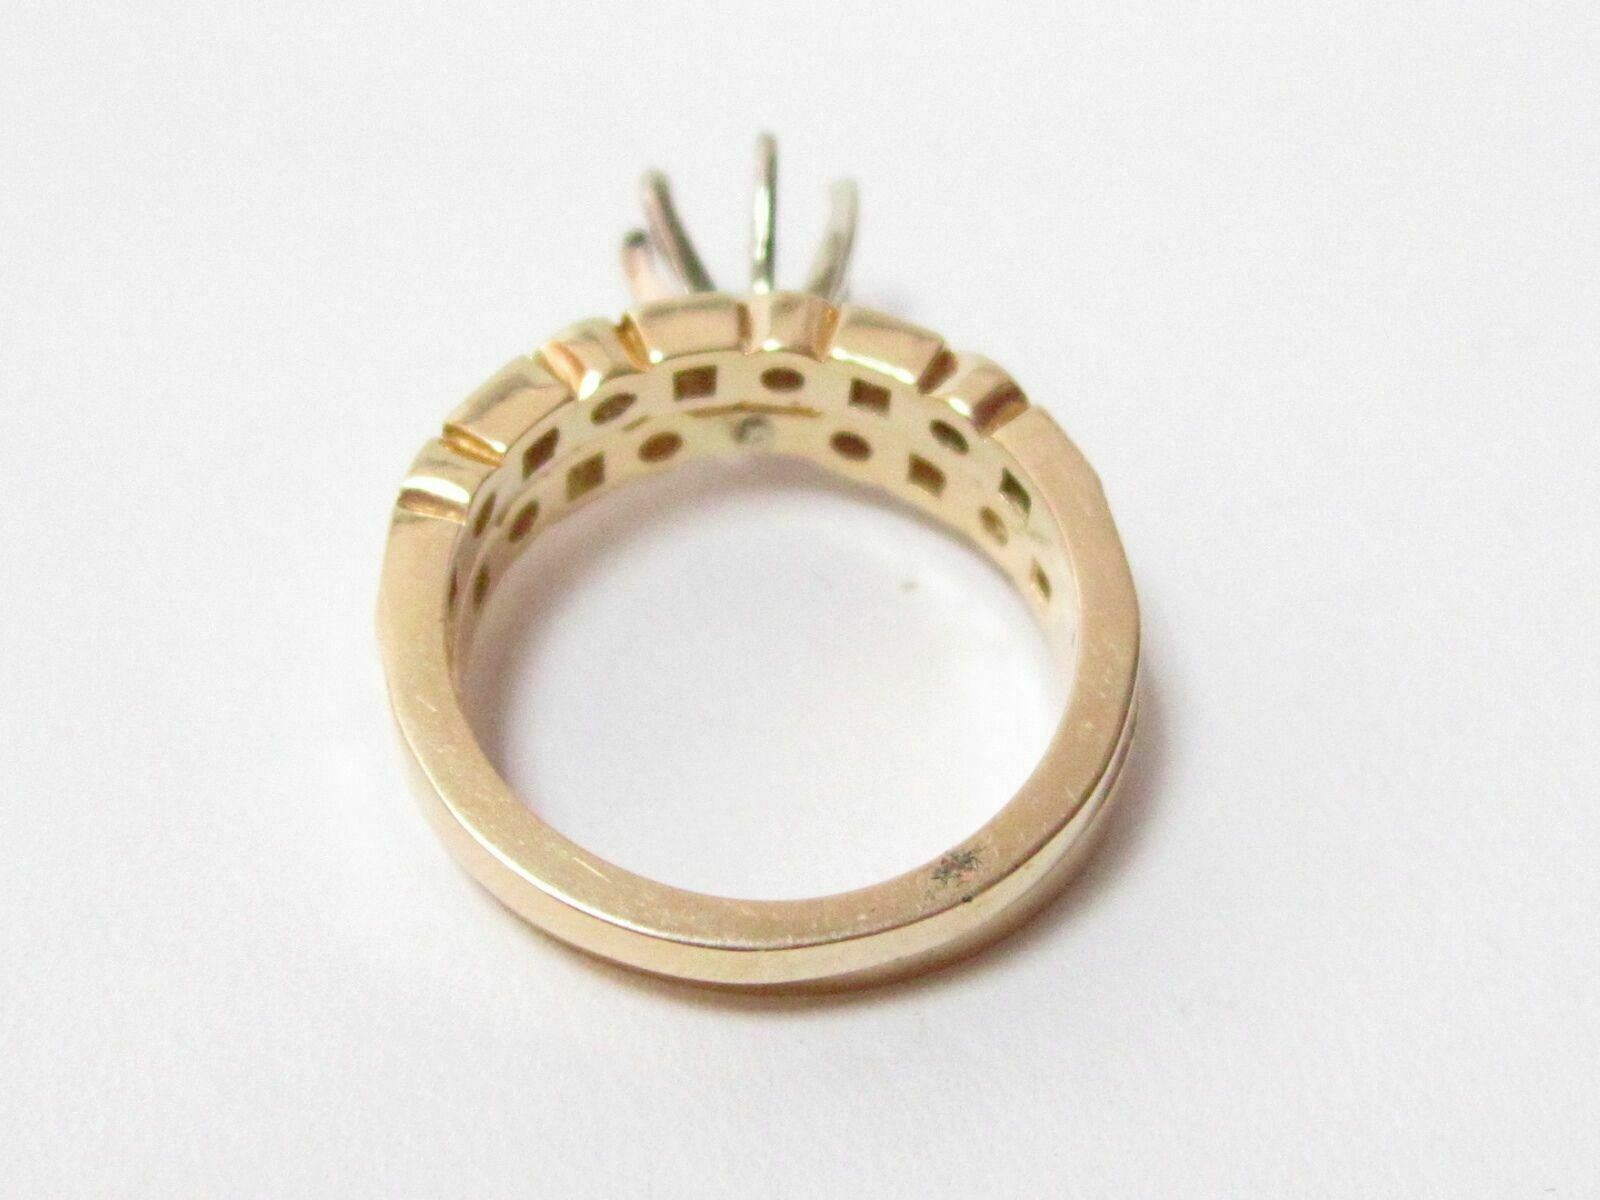 Fine .65 TCW Semi-Mount Diamond Wedding Set Ring Size 7 G SI-1 14k Yellow Gold